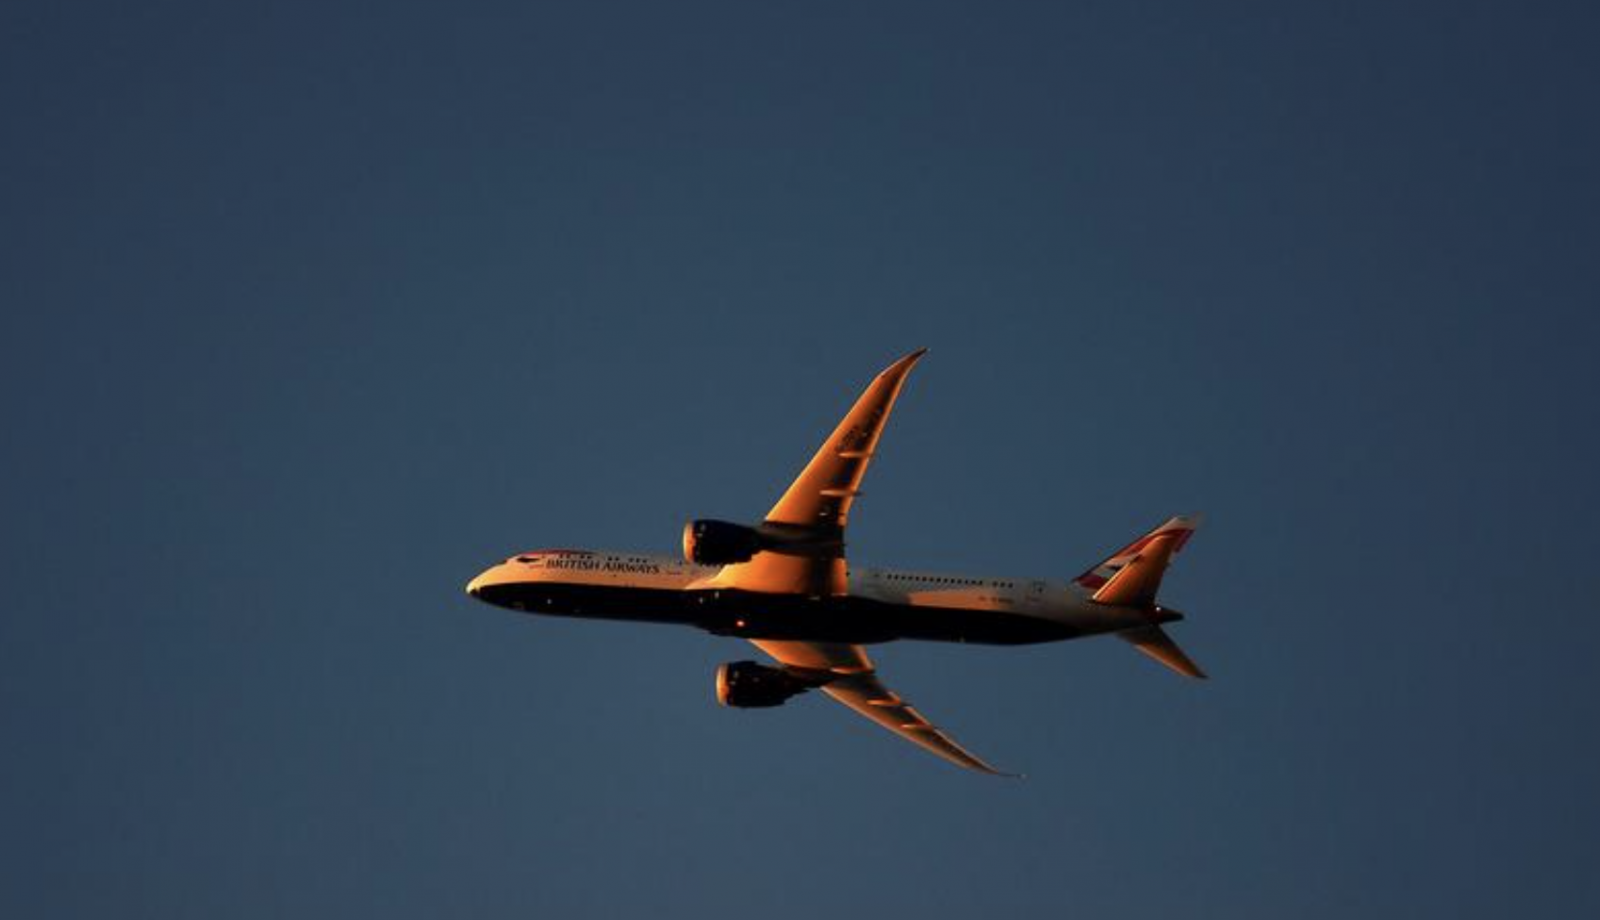 British Airways owner IAG raises $1.4 billion to ride out travel turmoil